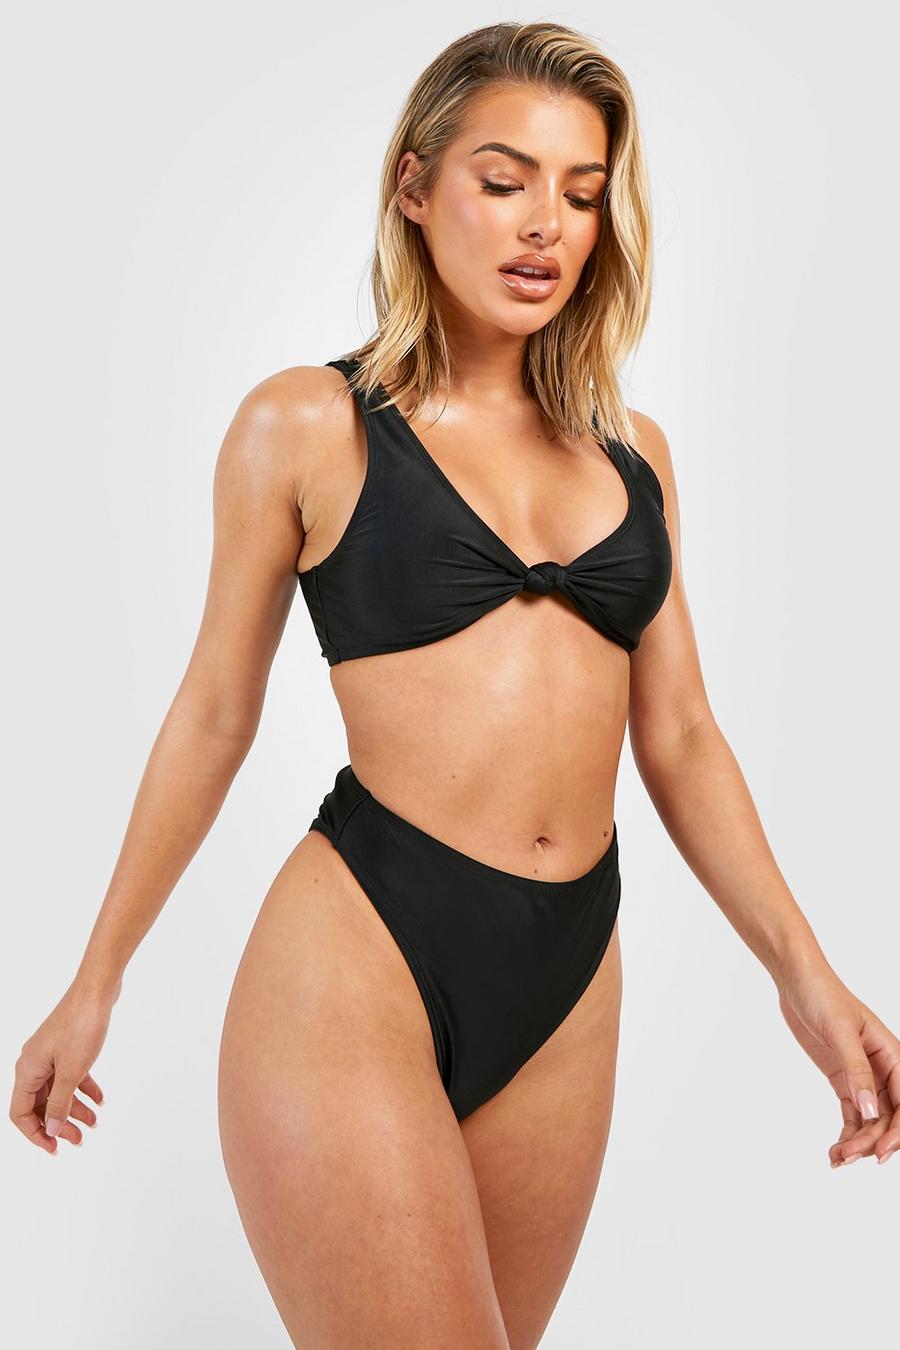 Black Opgeknoopte Bikini Set Met Laag Decolleté